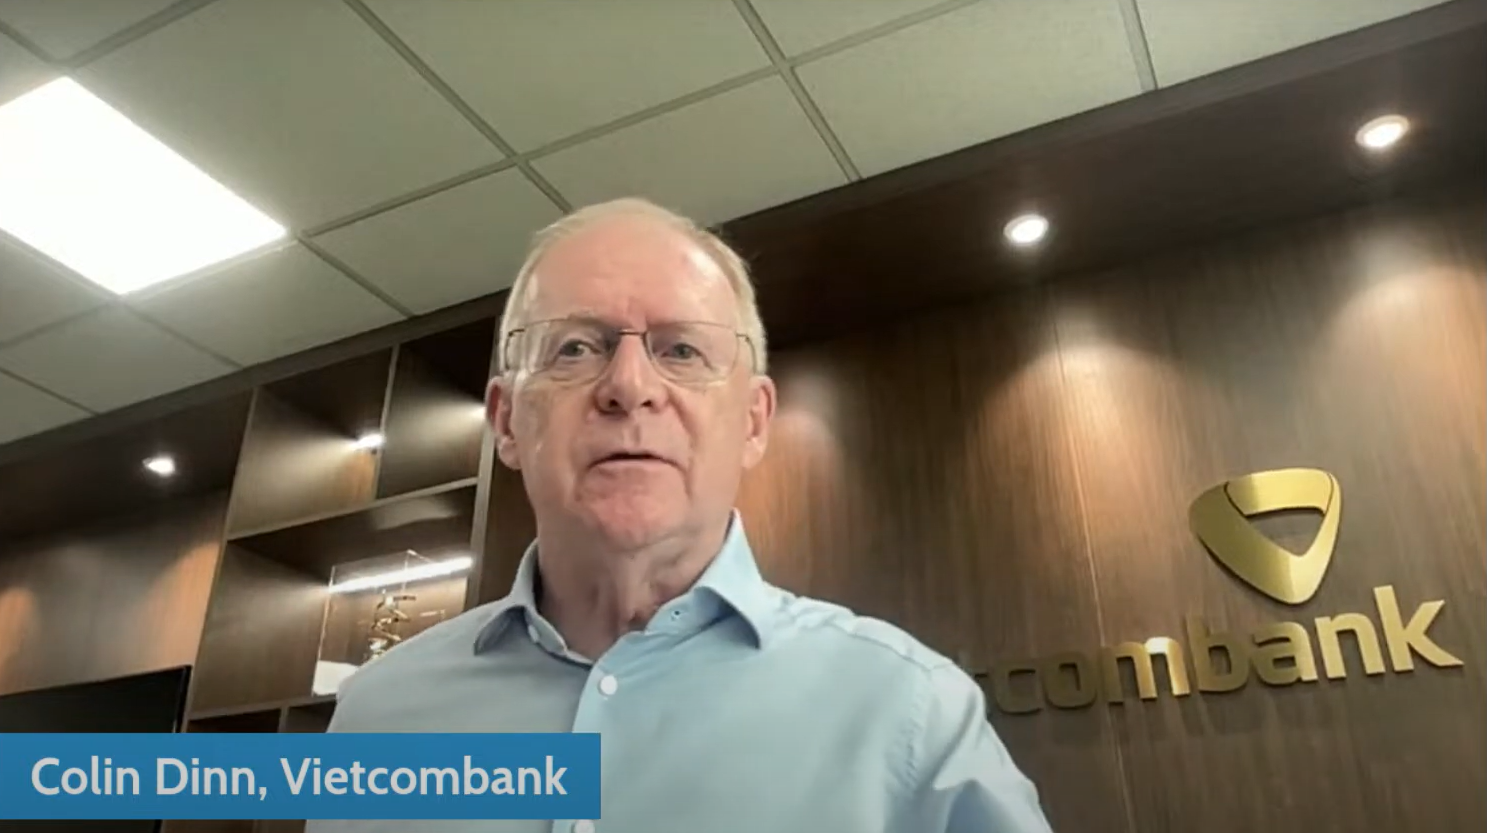 Colin Dinn, Chief Transformation Officer of Vietcombank